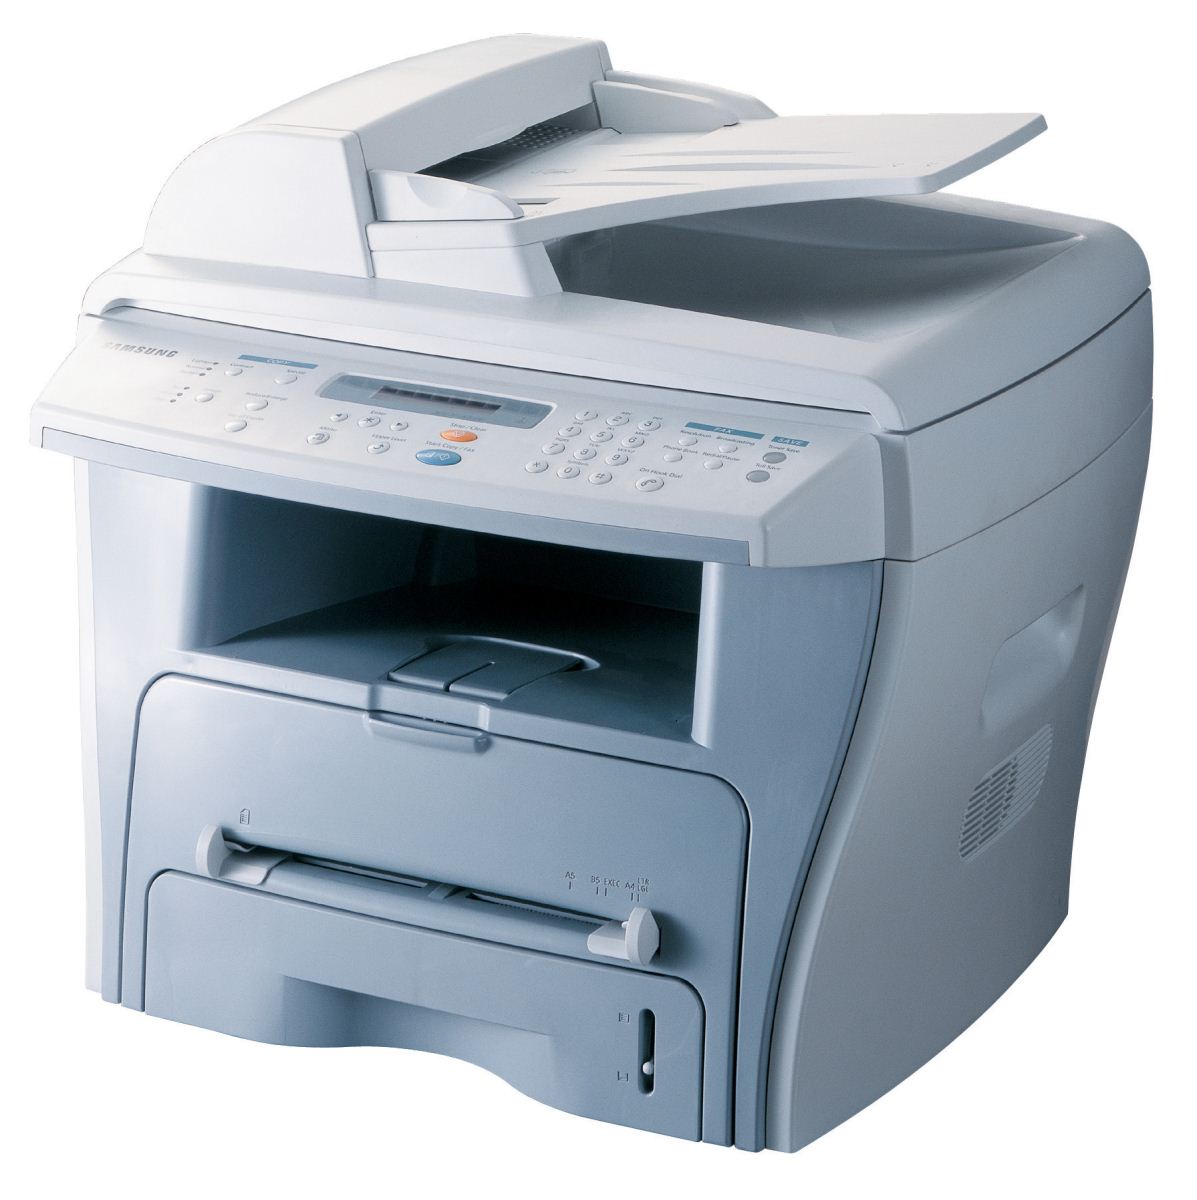 Nạp mực máy in Samsung SCX 4216F, In, Scan, Copy, Fax, Laser trắng đen